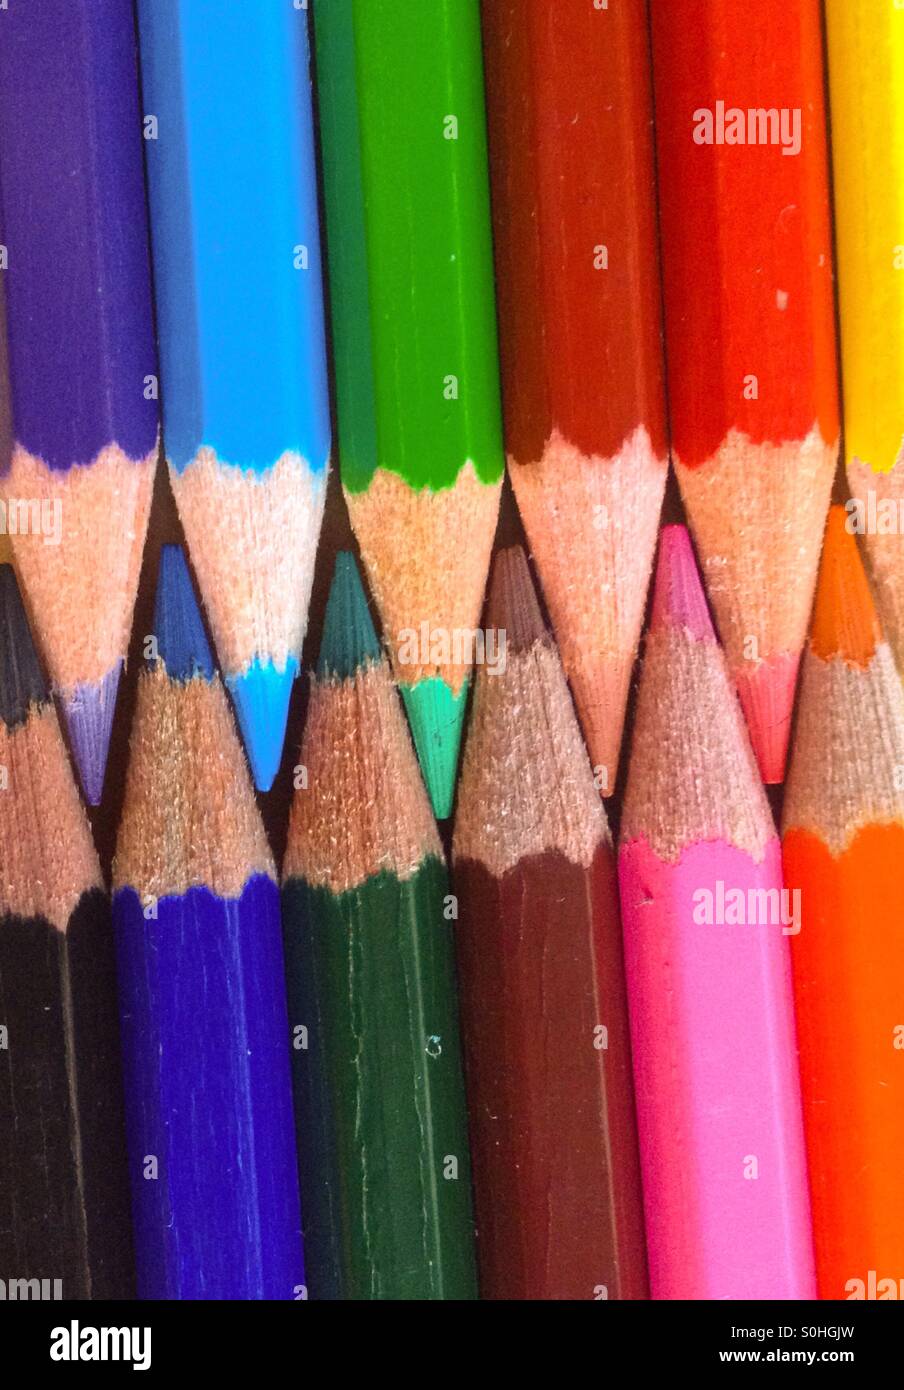 Colorful pencils Stock Photo